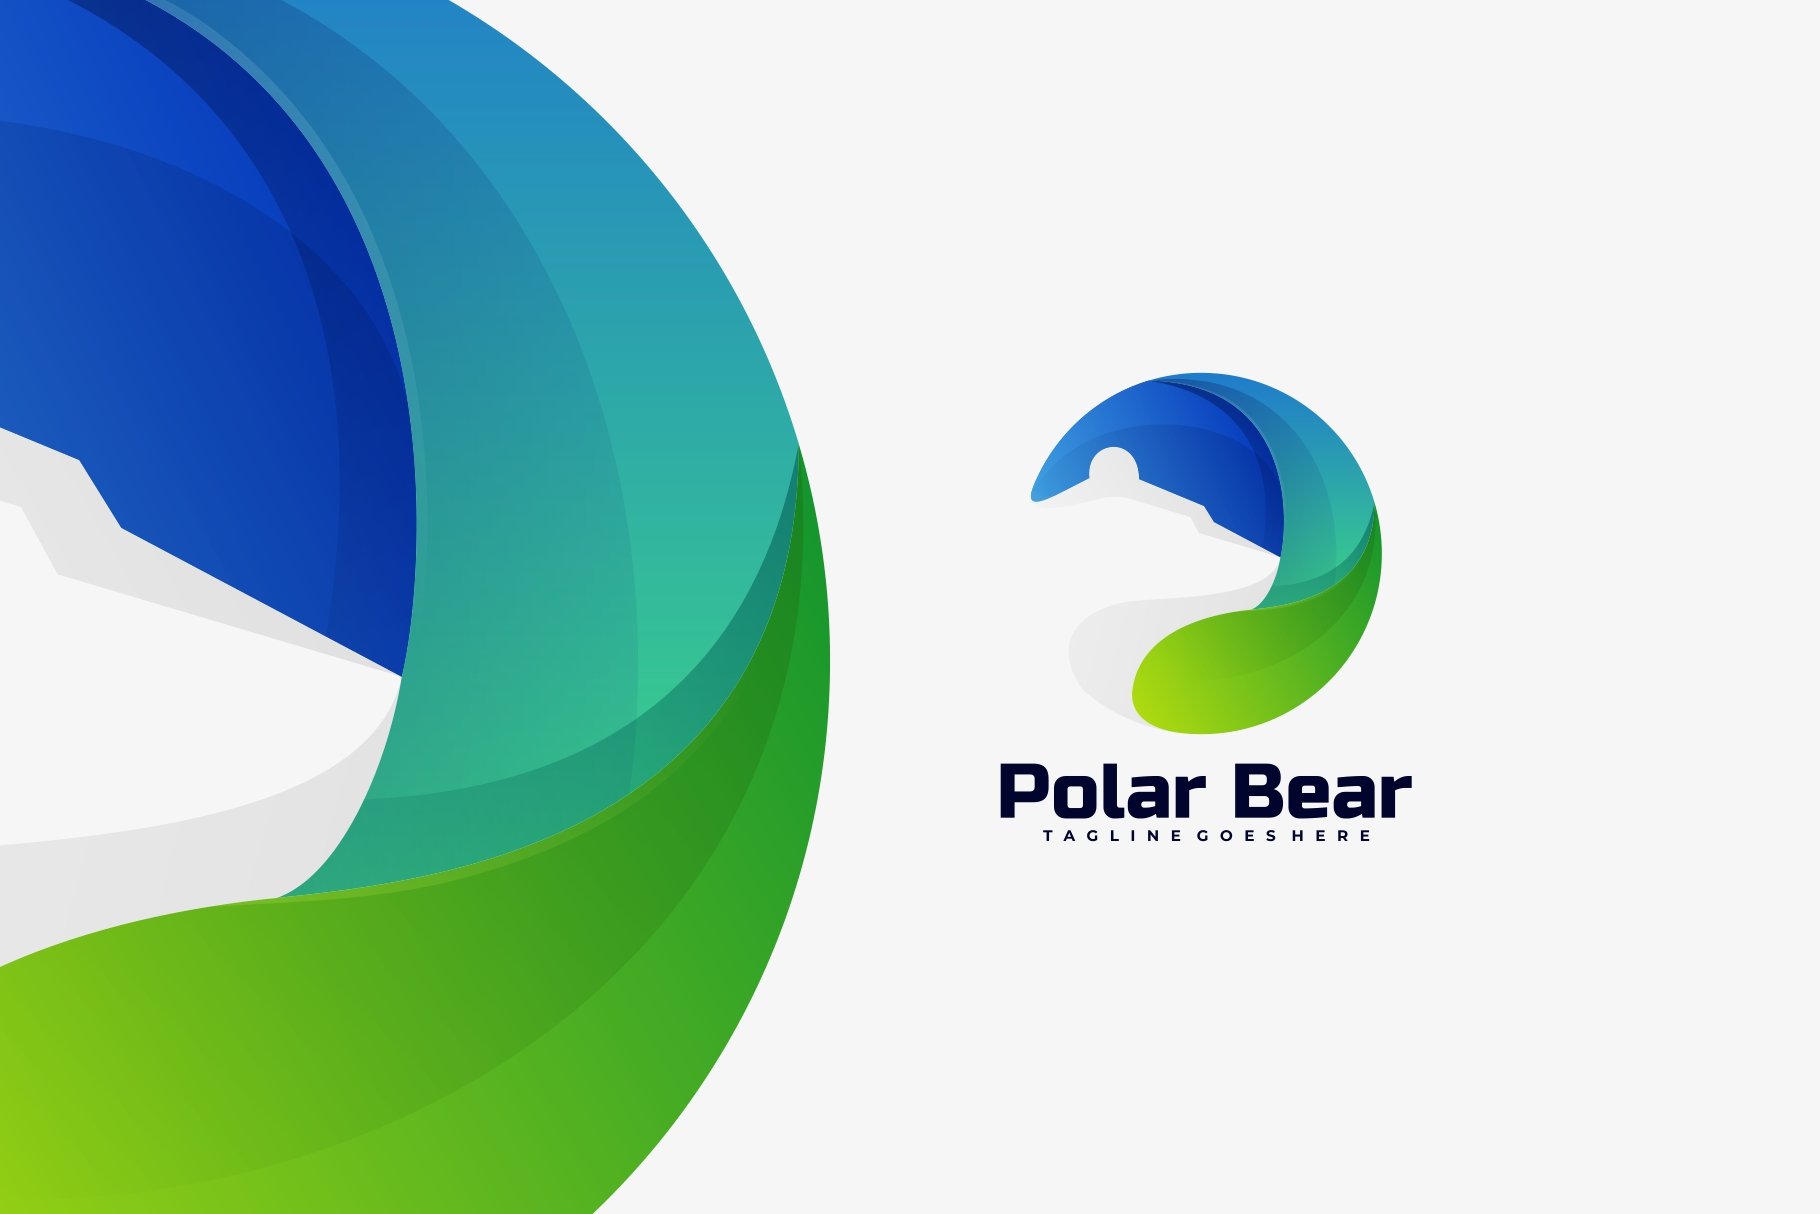 Polar Negative Space Logo cover image.